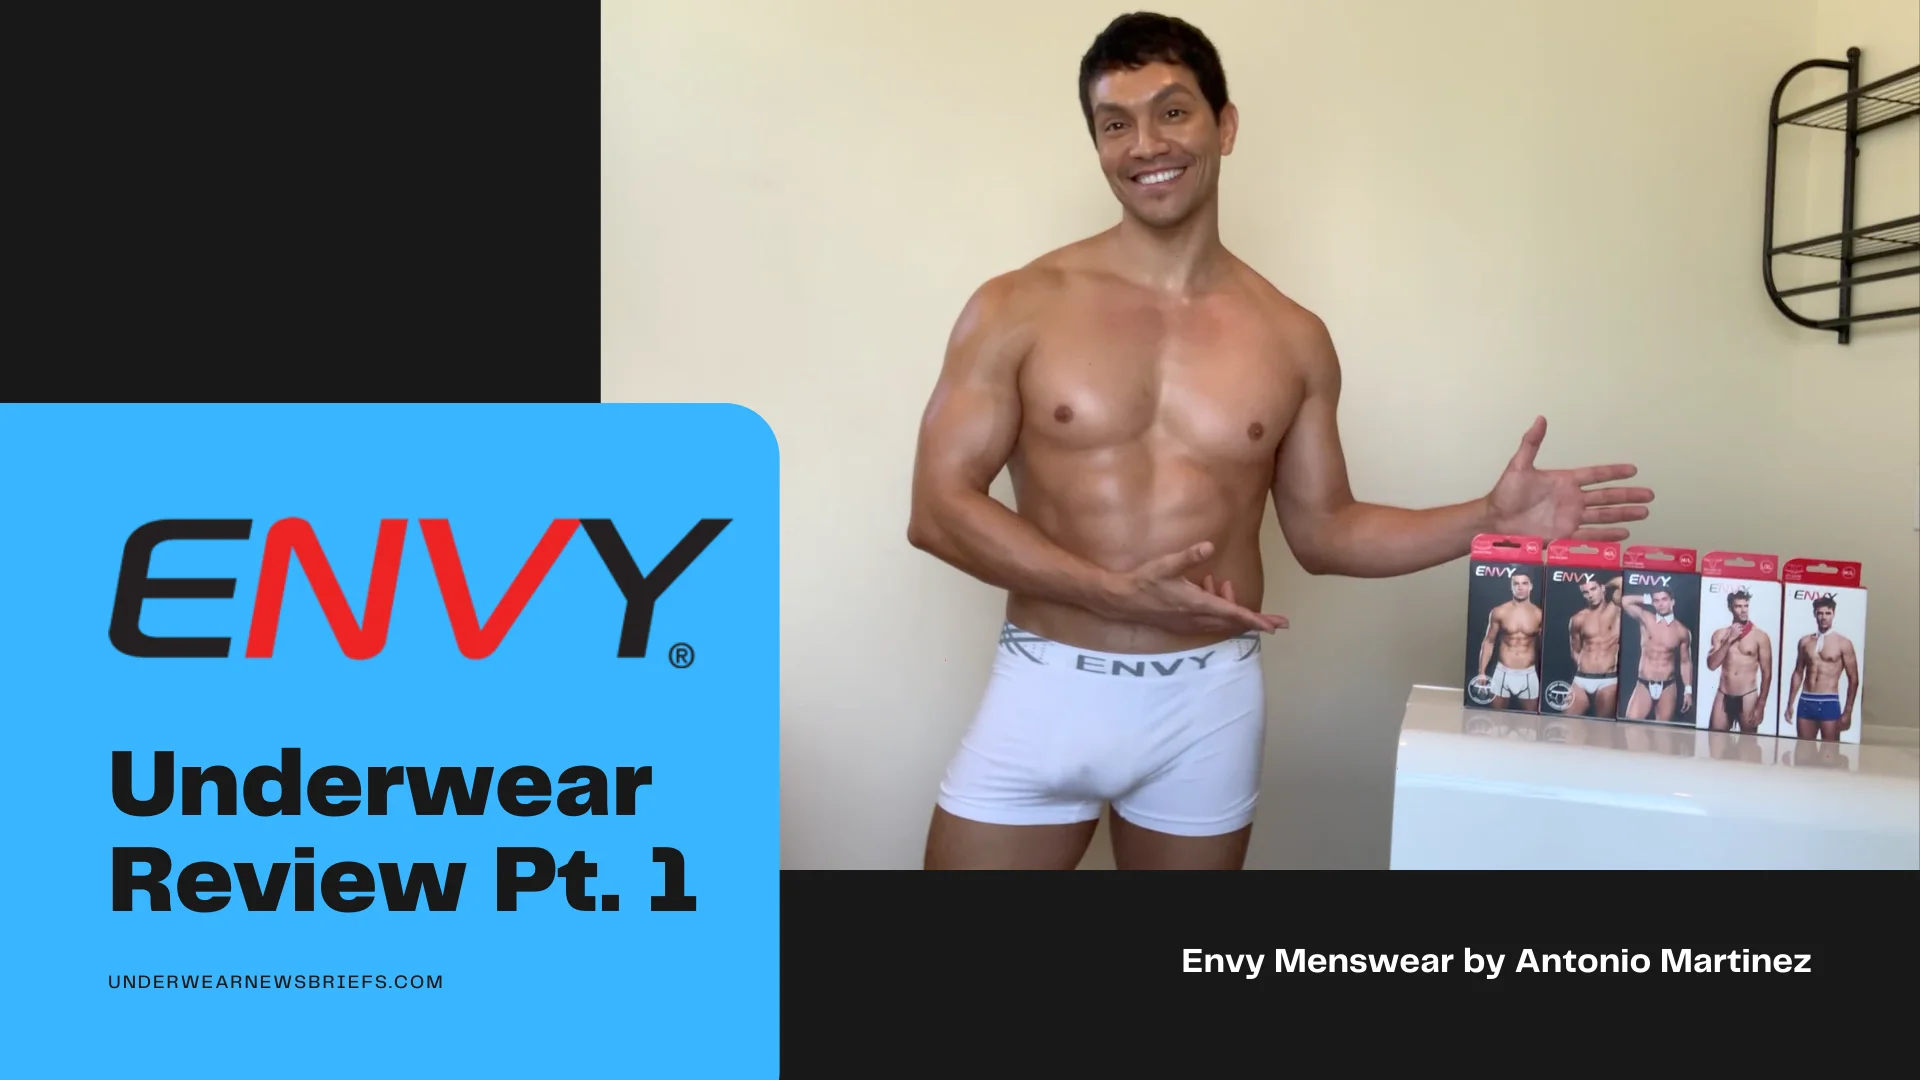 Envy Menswear Reviews by Antonio on Vimeo